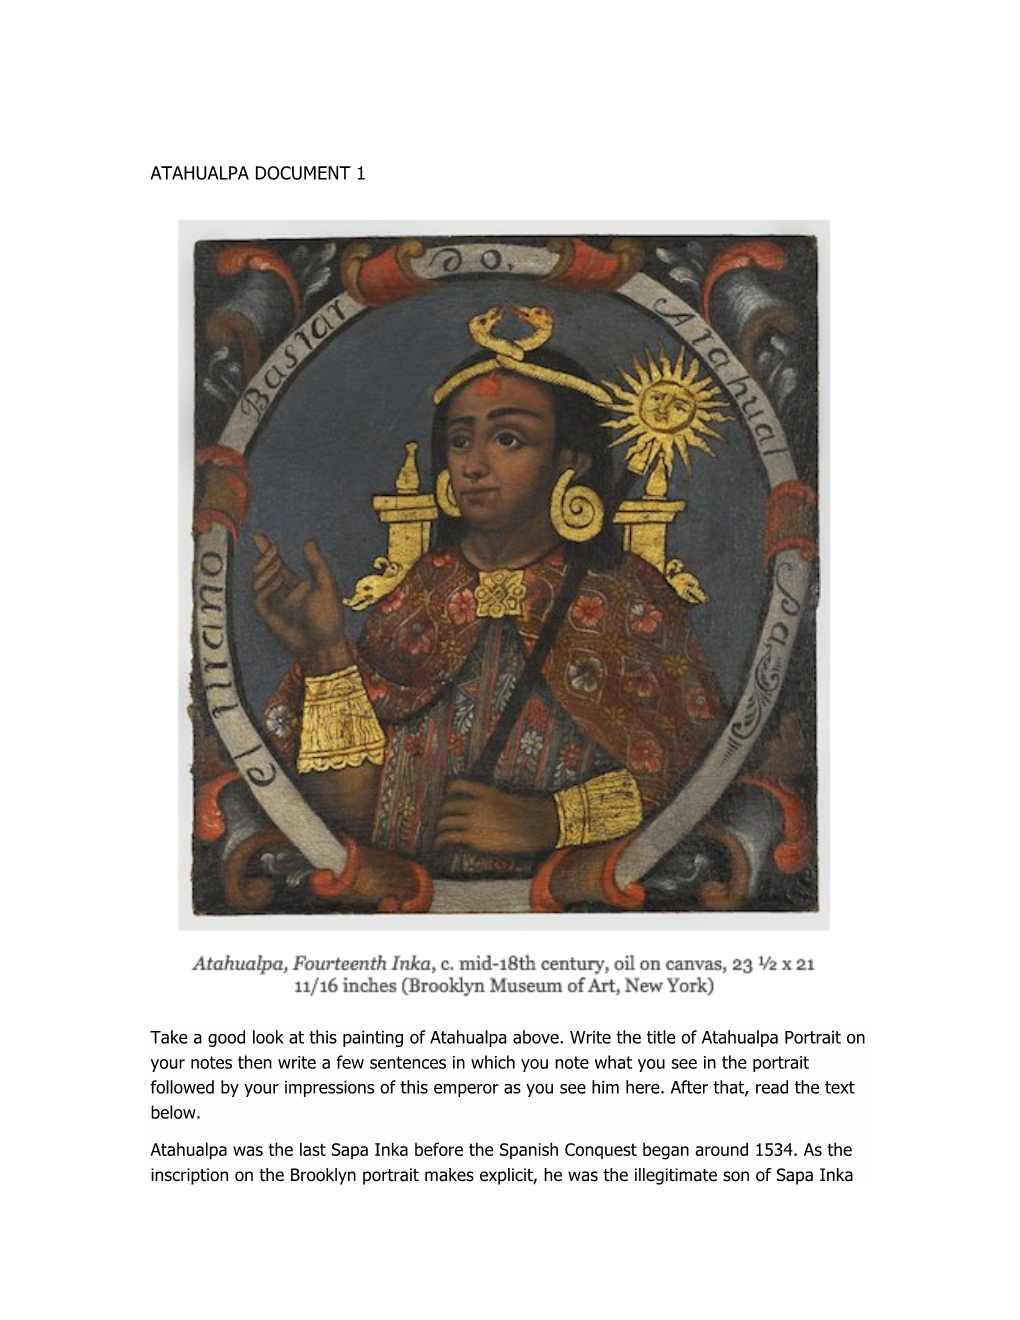 Atahualpa Document 1